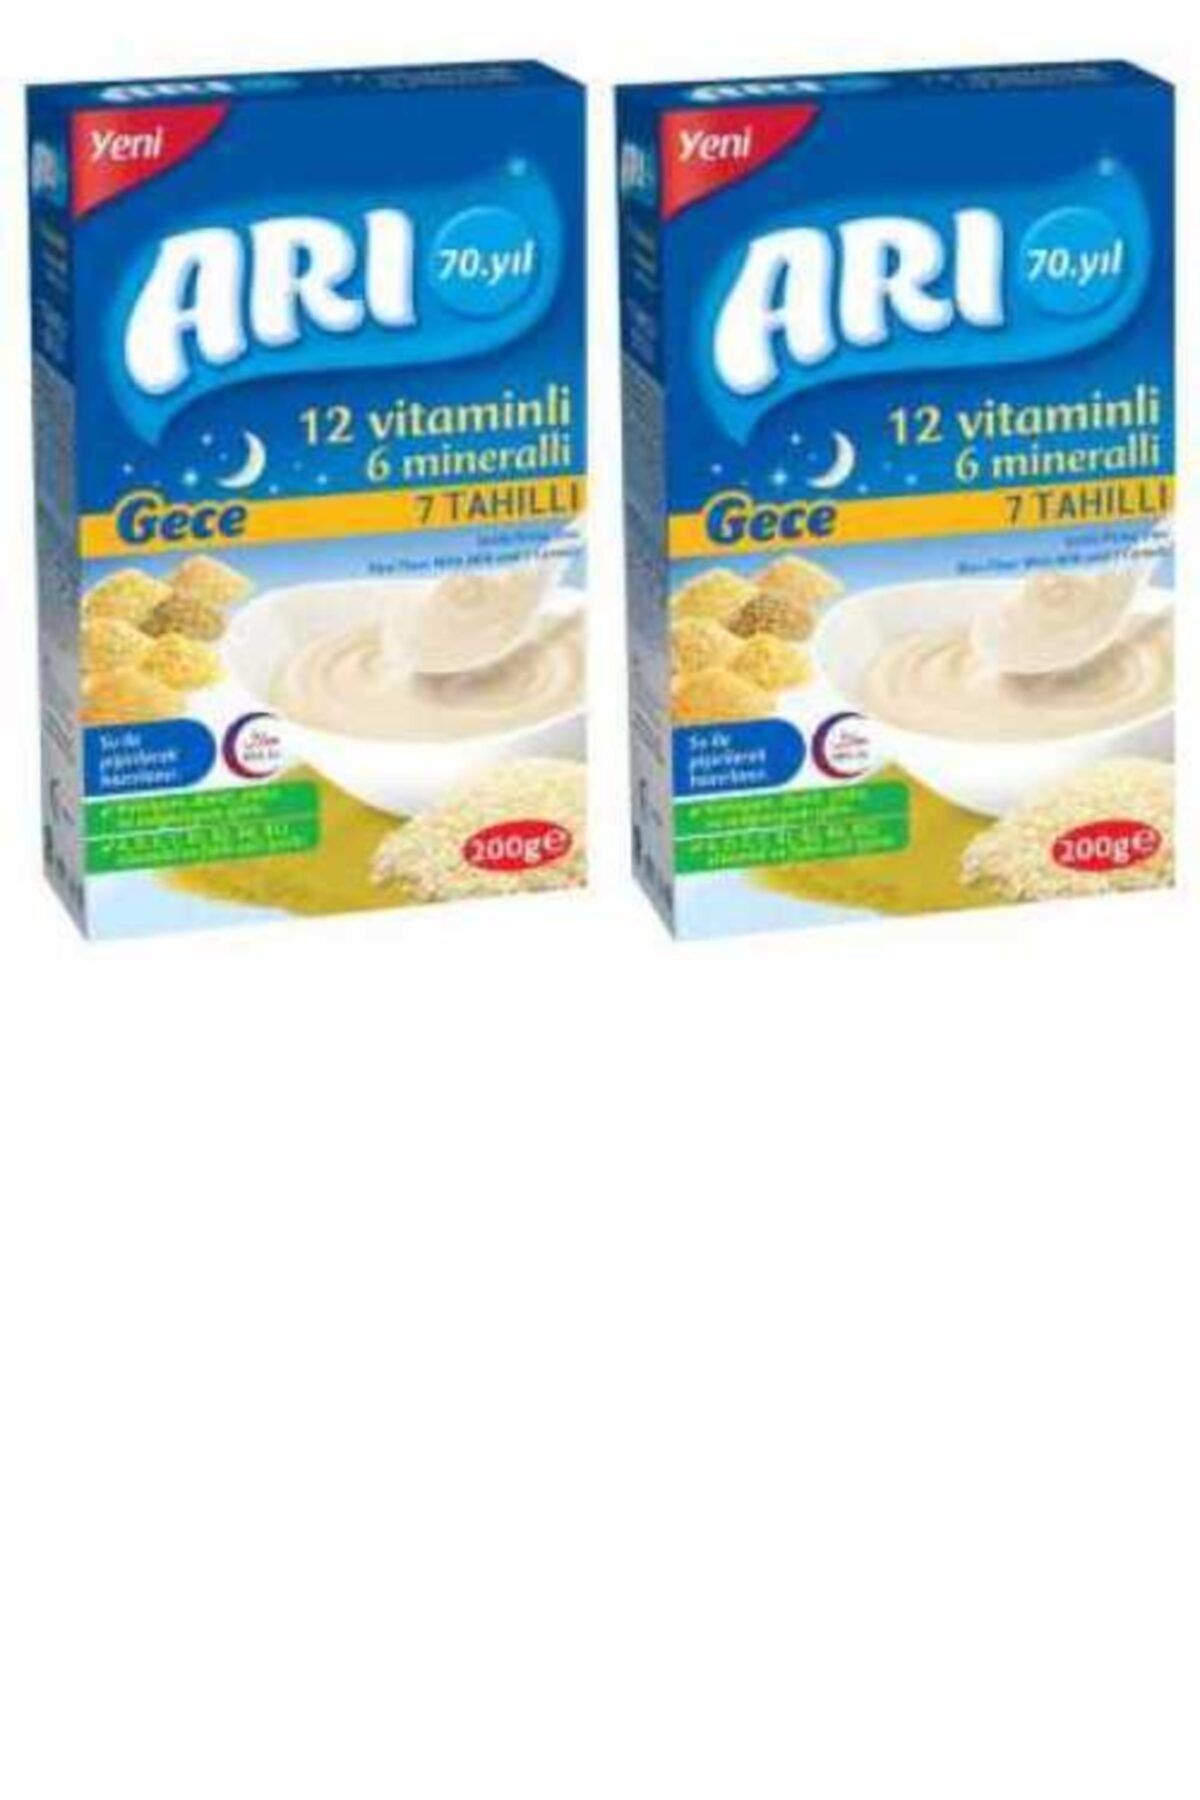 Arı Mama 7 Tahıllı Sütlü Gece Pirinç Unu 200 Gr X 2 Paket